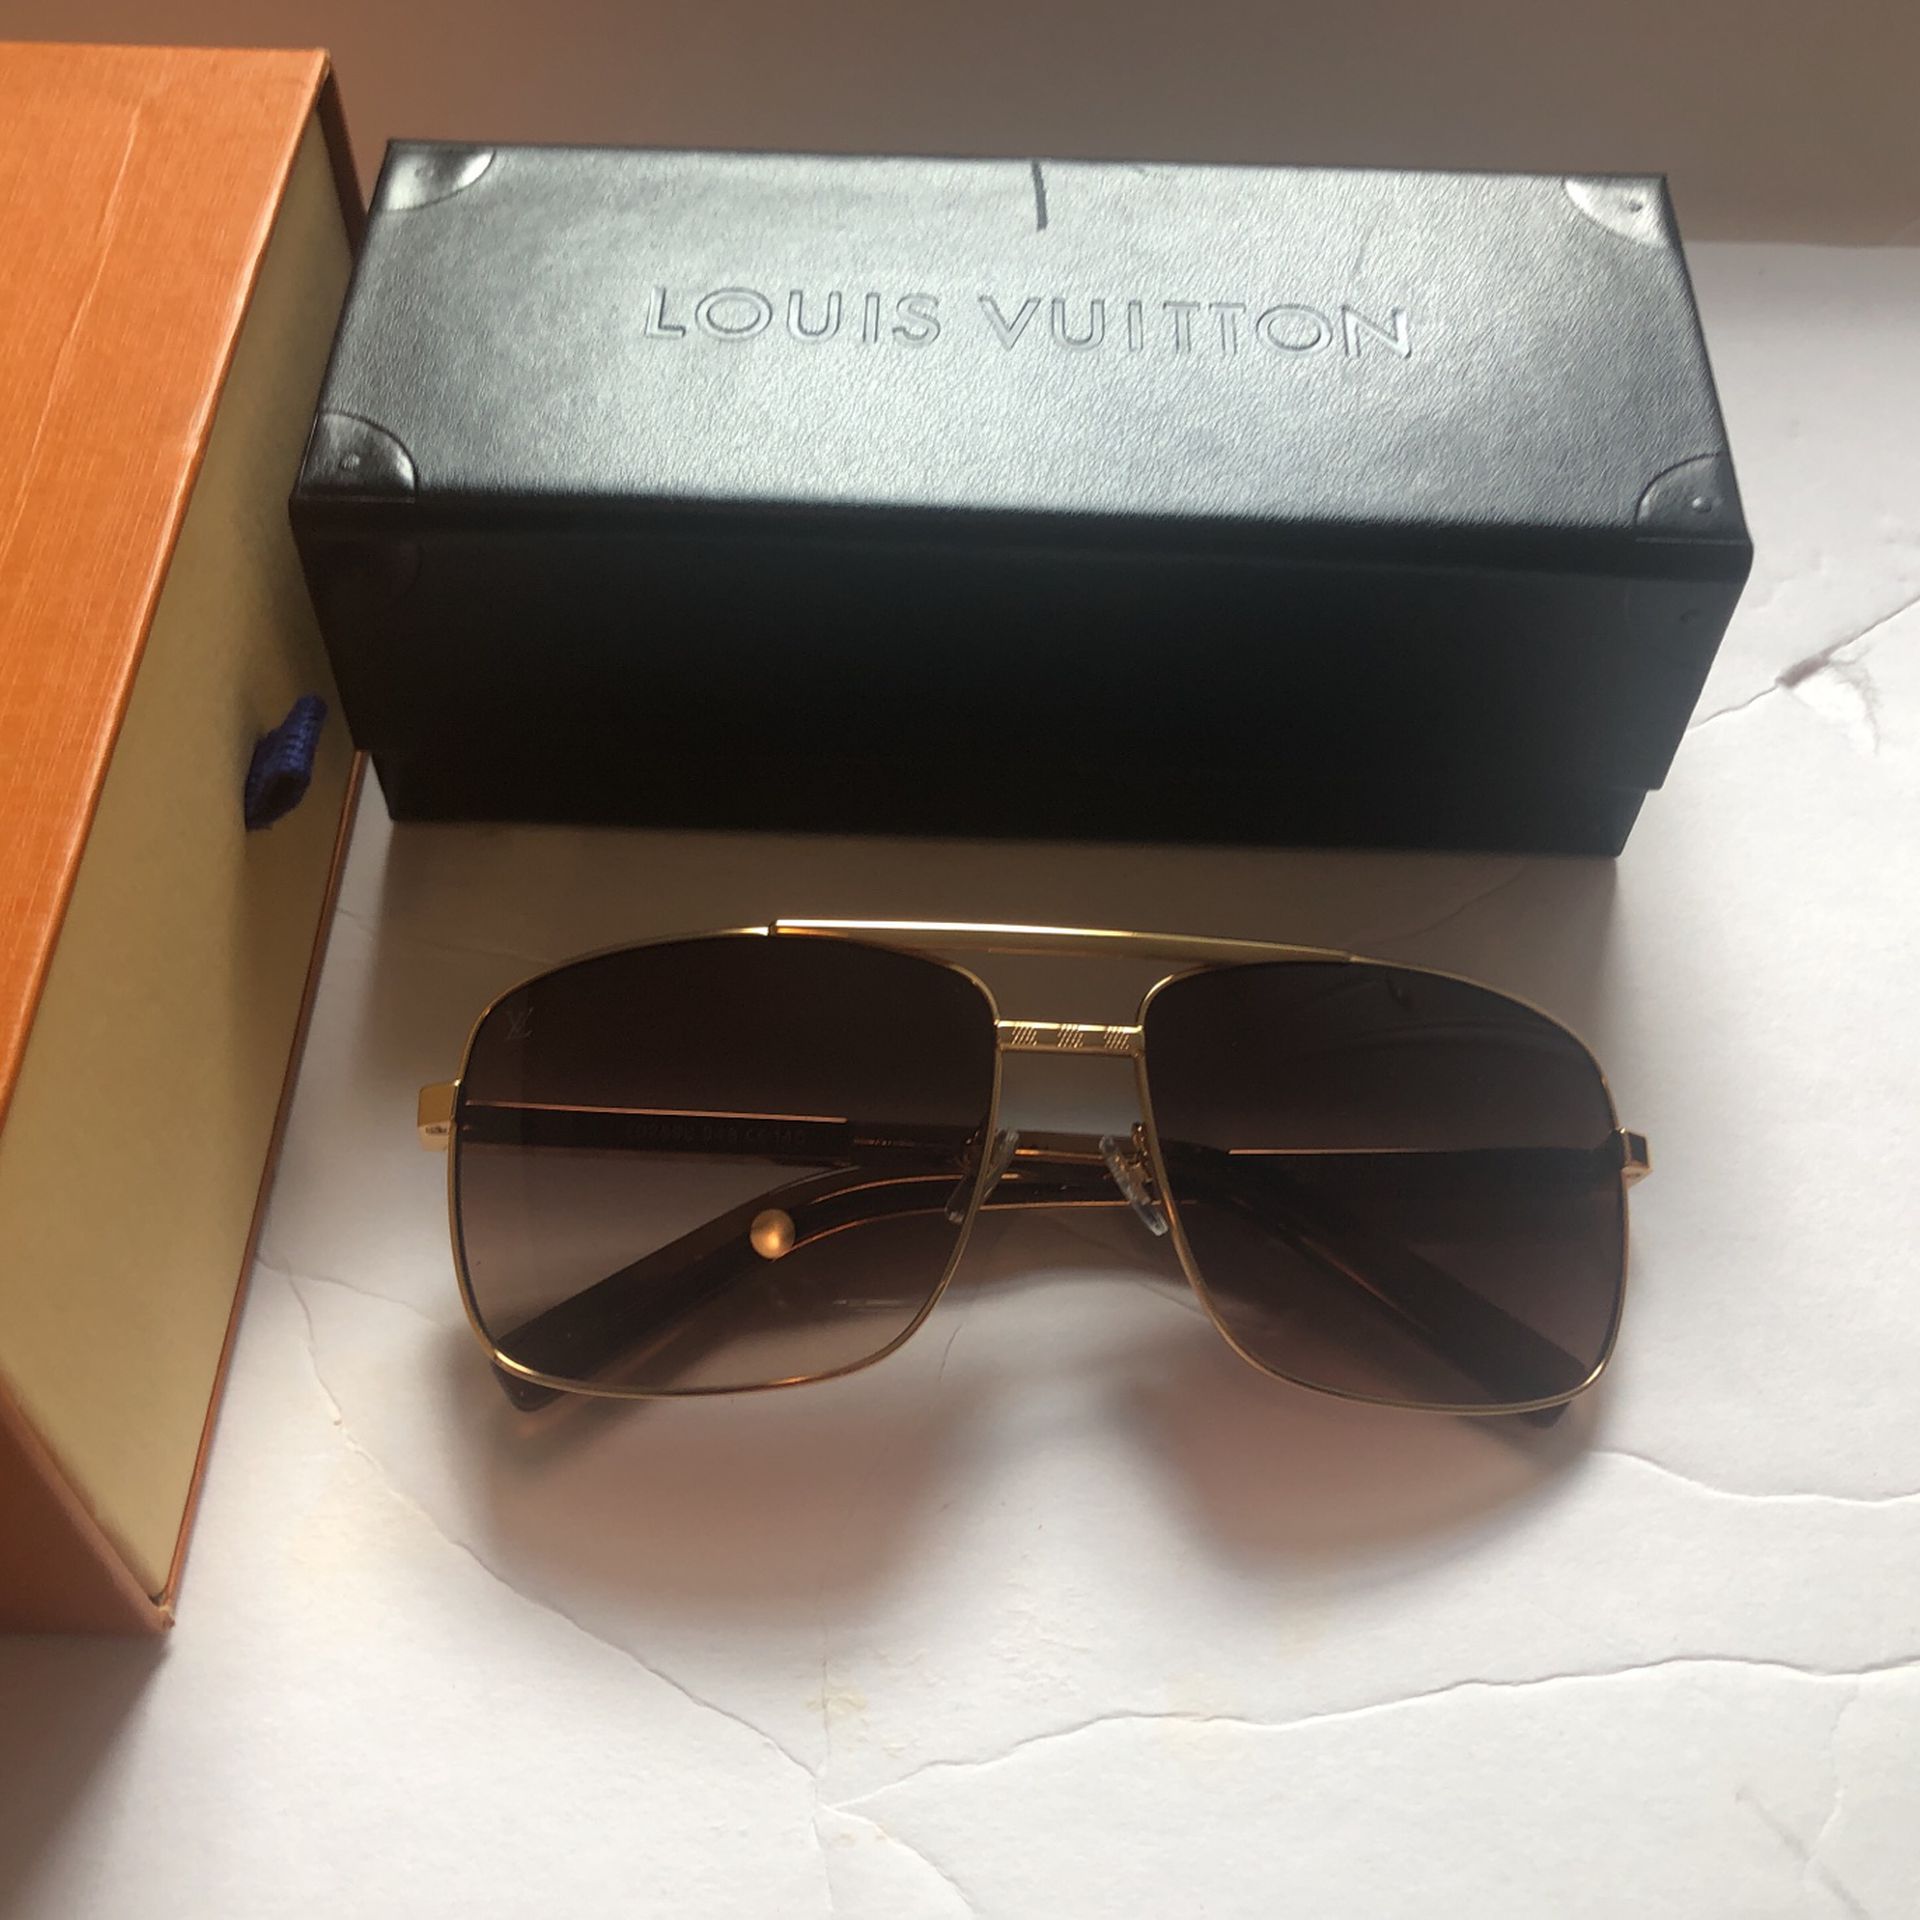 Mens Louis Vuitton LV Authentic Sunglasses for Sale in Ferris, TX - OfferUp